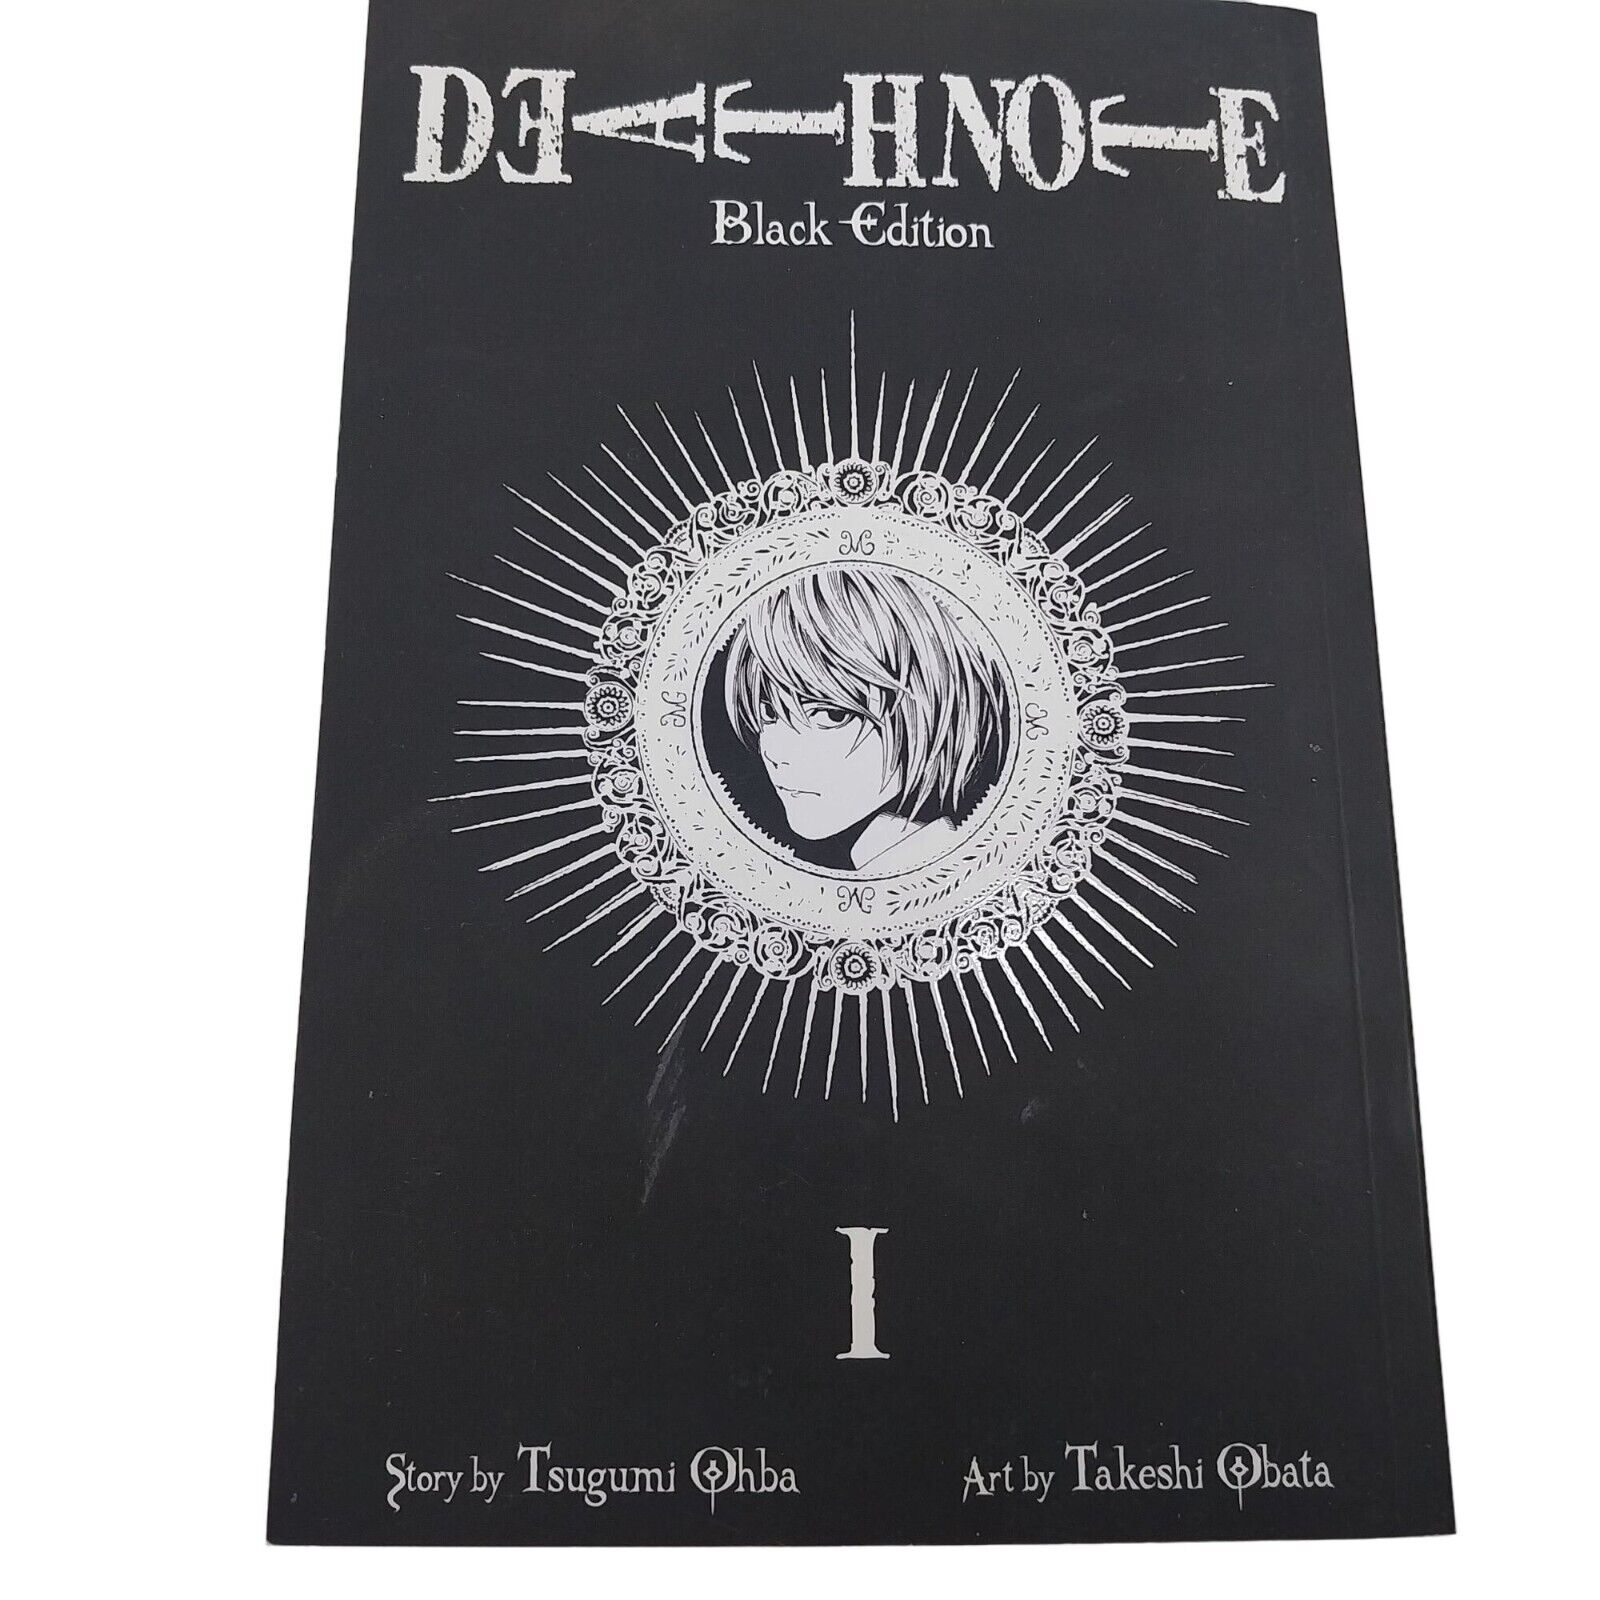 Deathnote 1 Black Edition Volumes 1-2